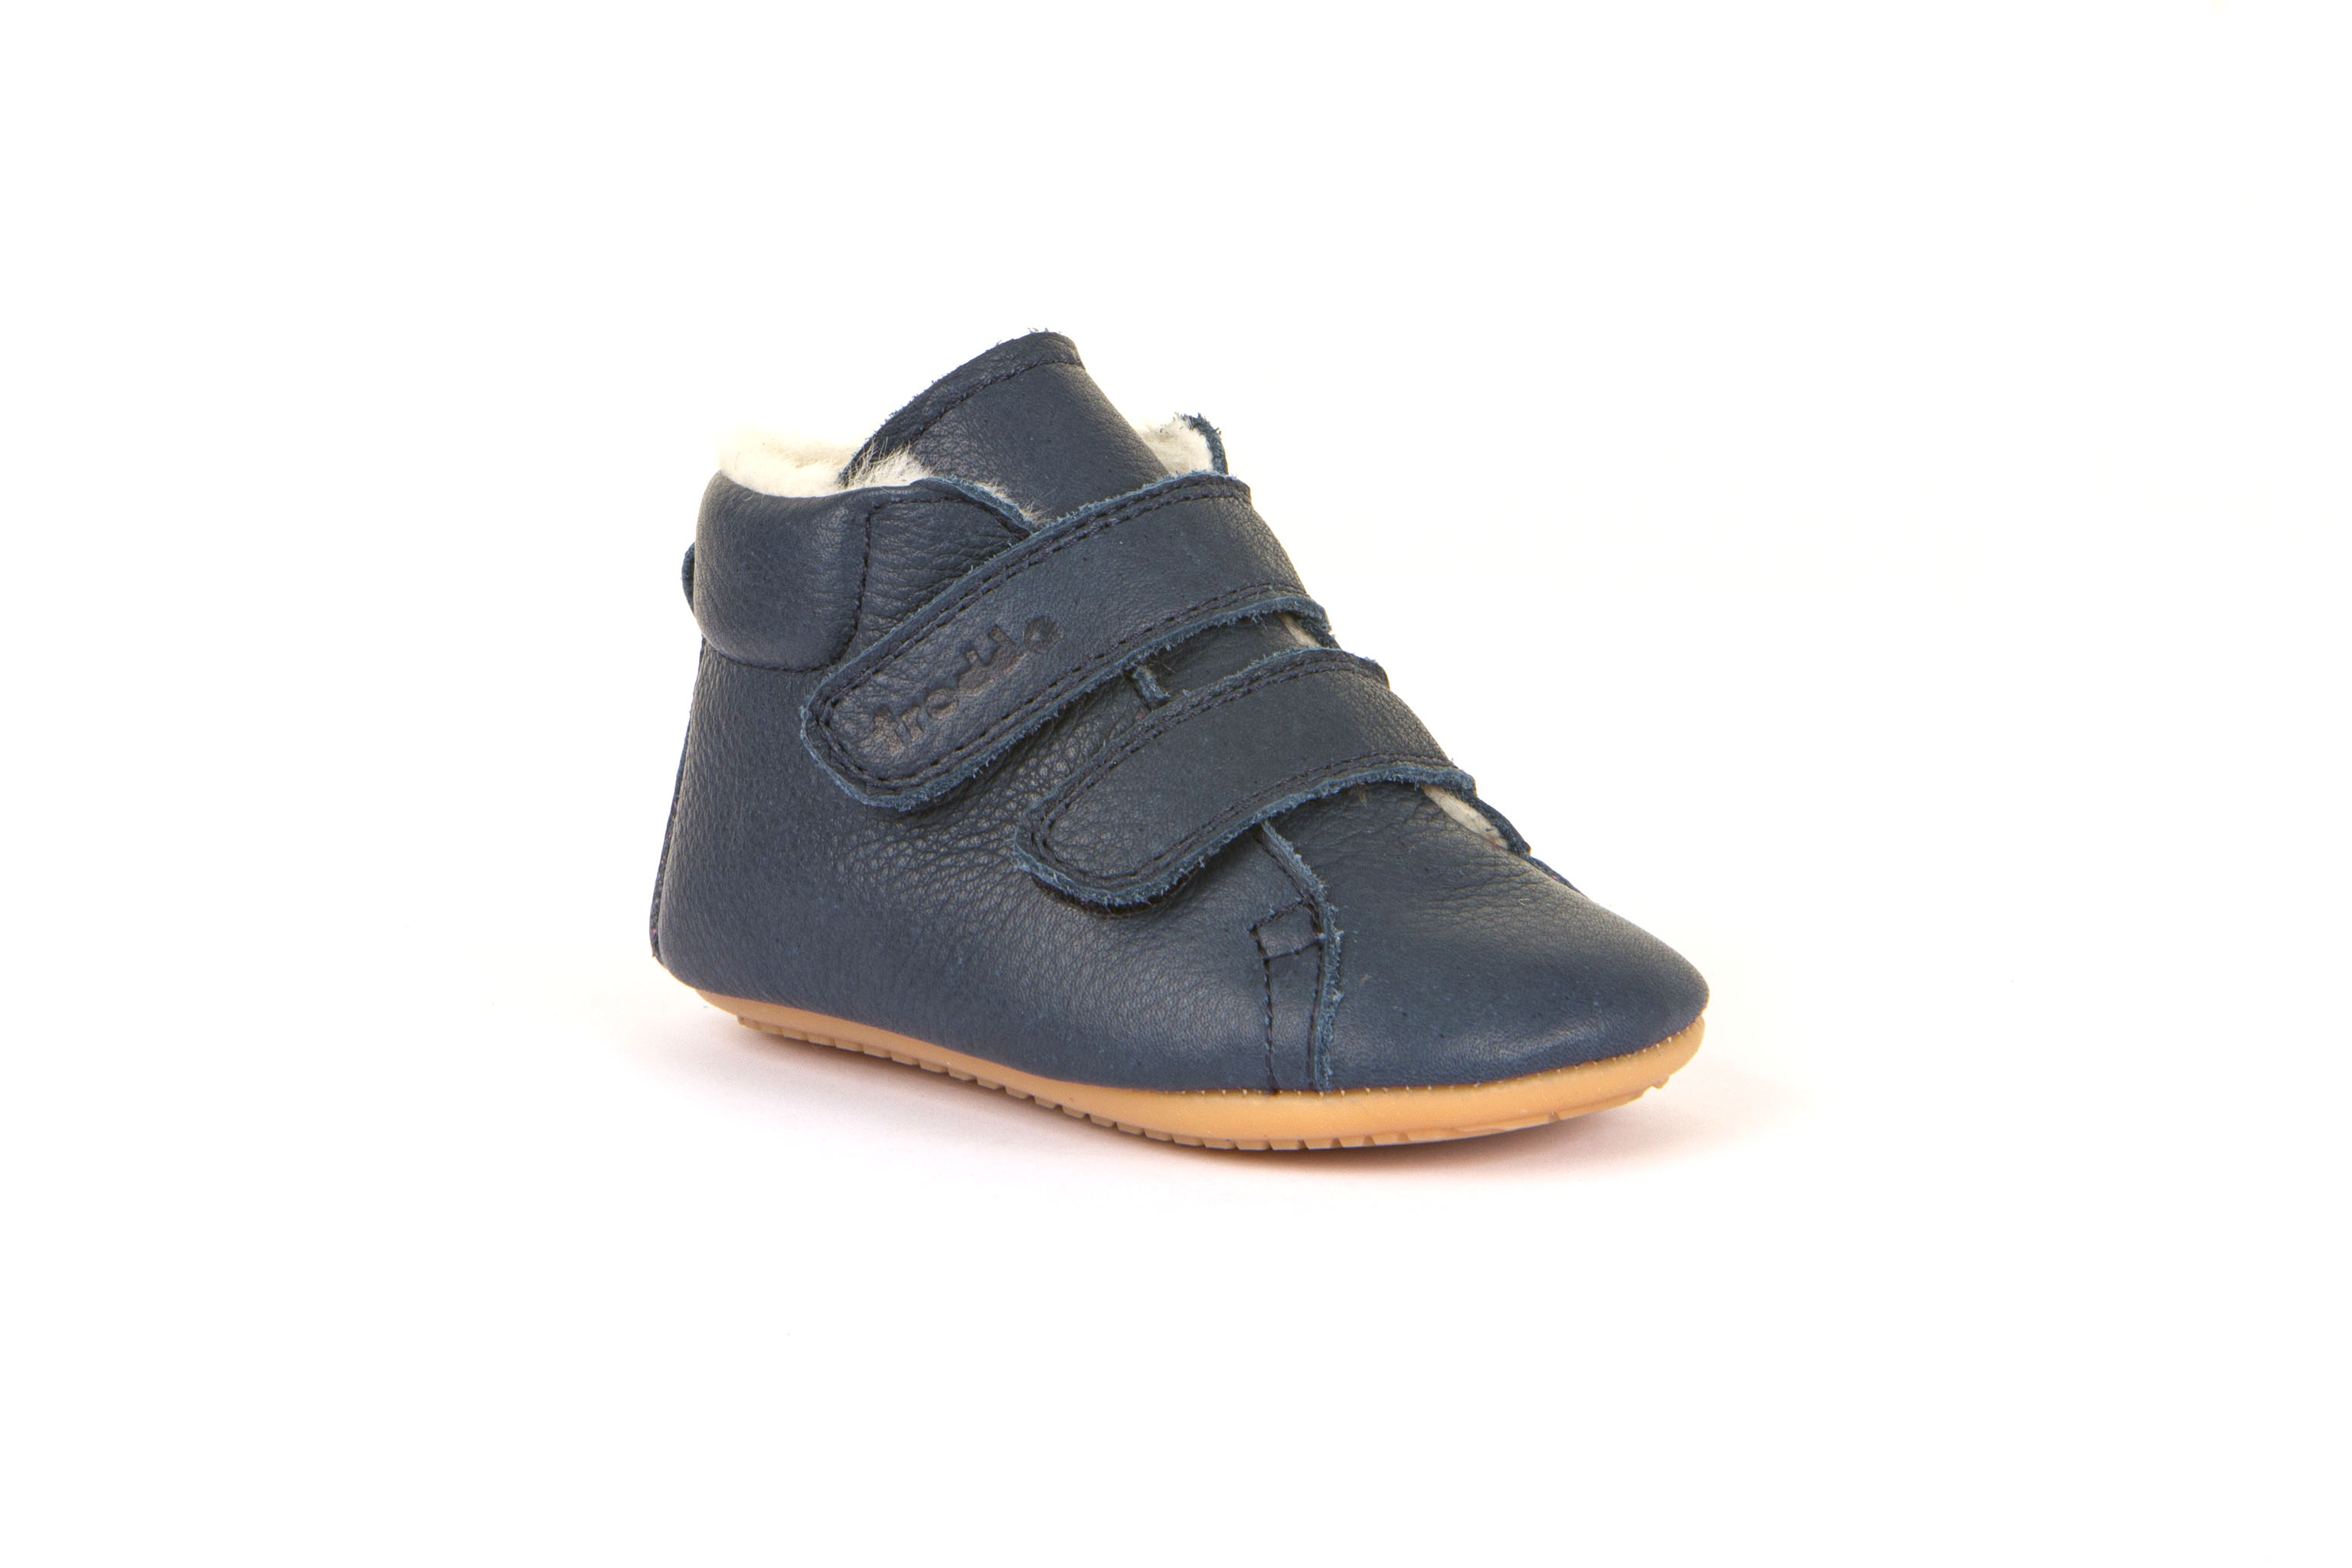 Levně boty Froddo Dark blue G1130013-2 (Prewalkers, s kožešinou)